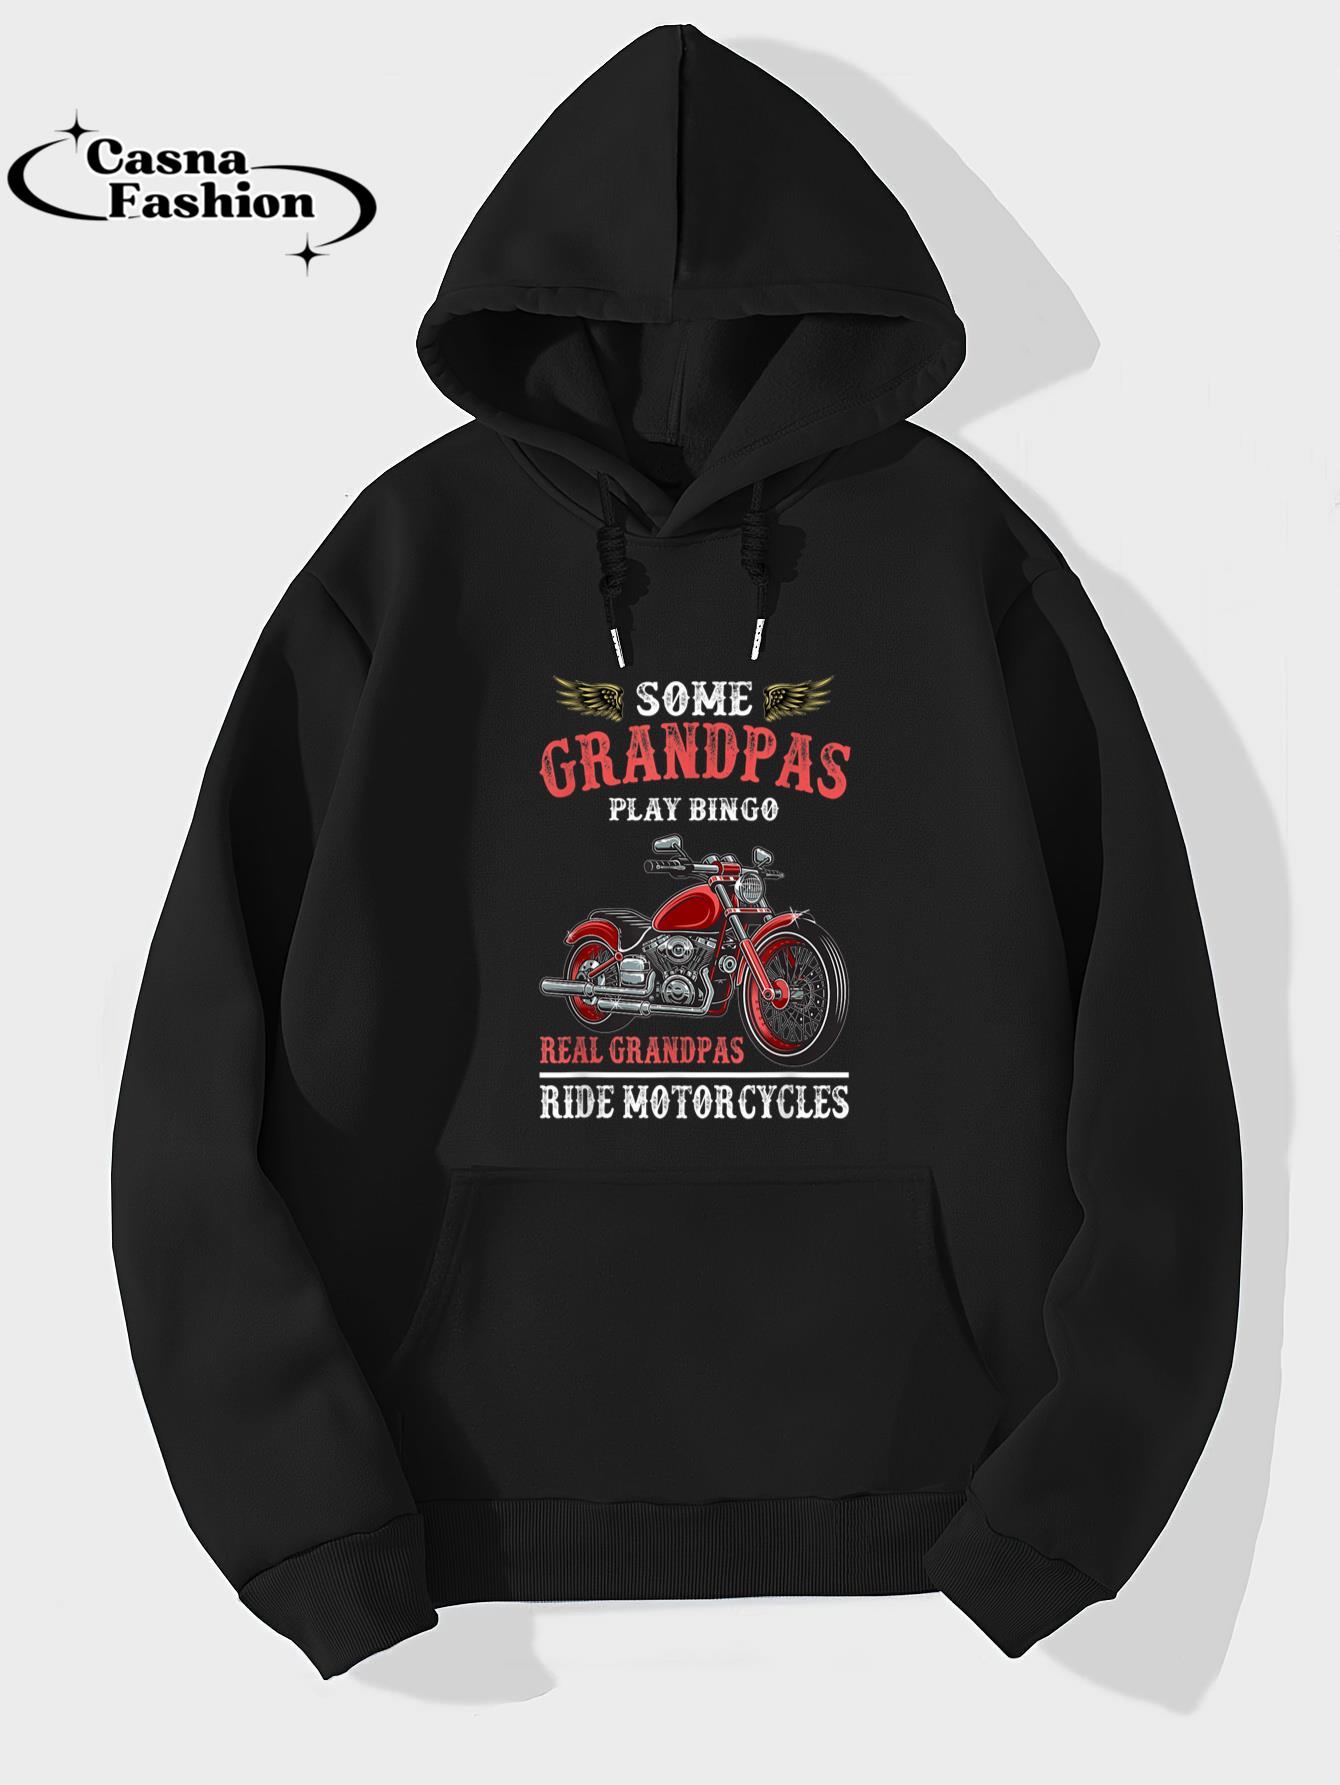 casnafashion_Hoodie_Real Grandpas Ride Motorcycles Funny Bike Riding Gift Biker T-Shirt_hoodie_black hoodie